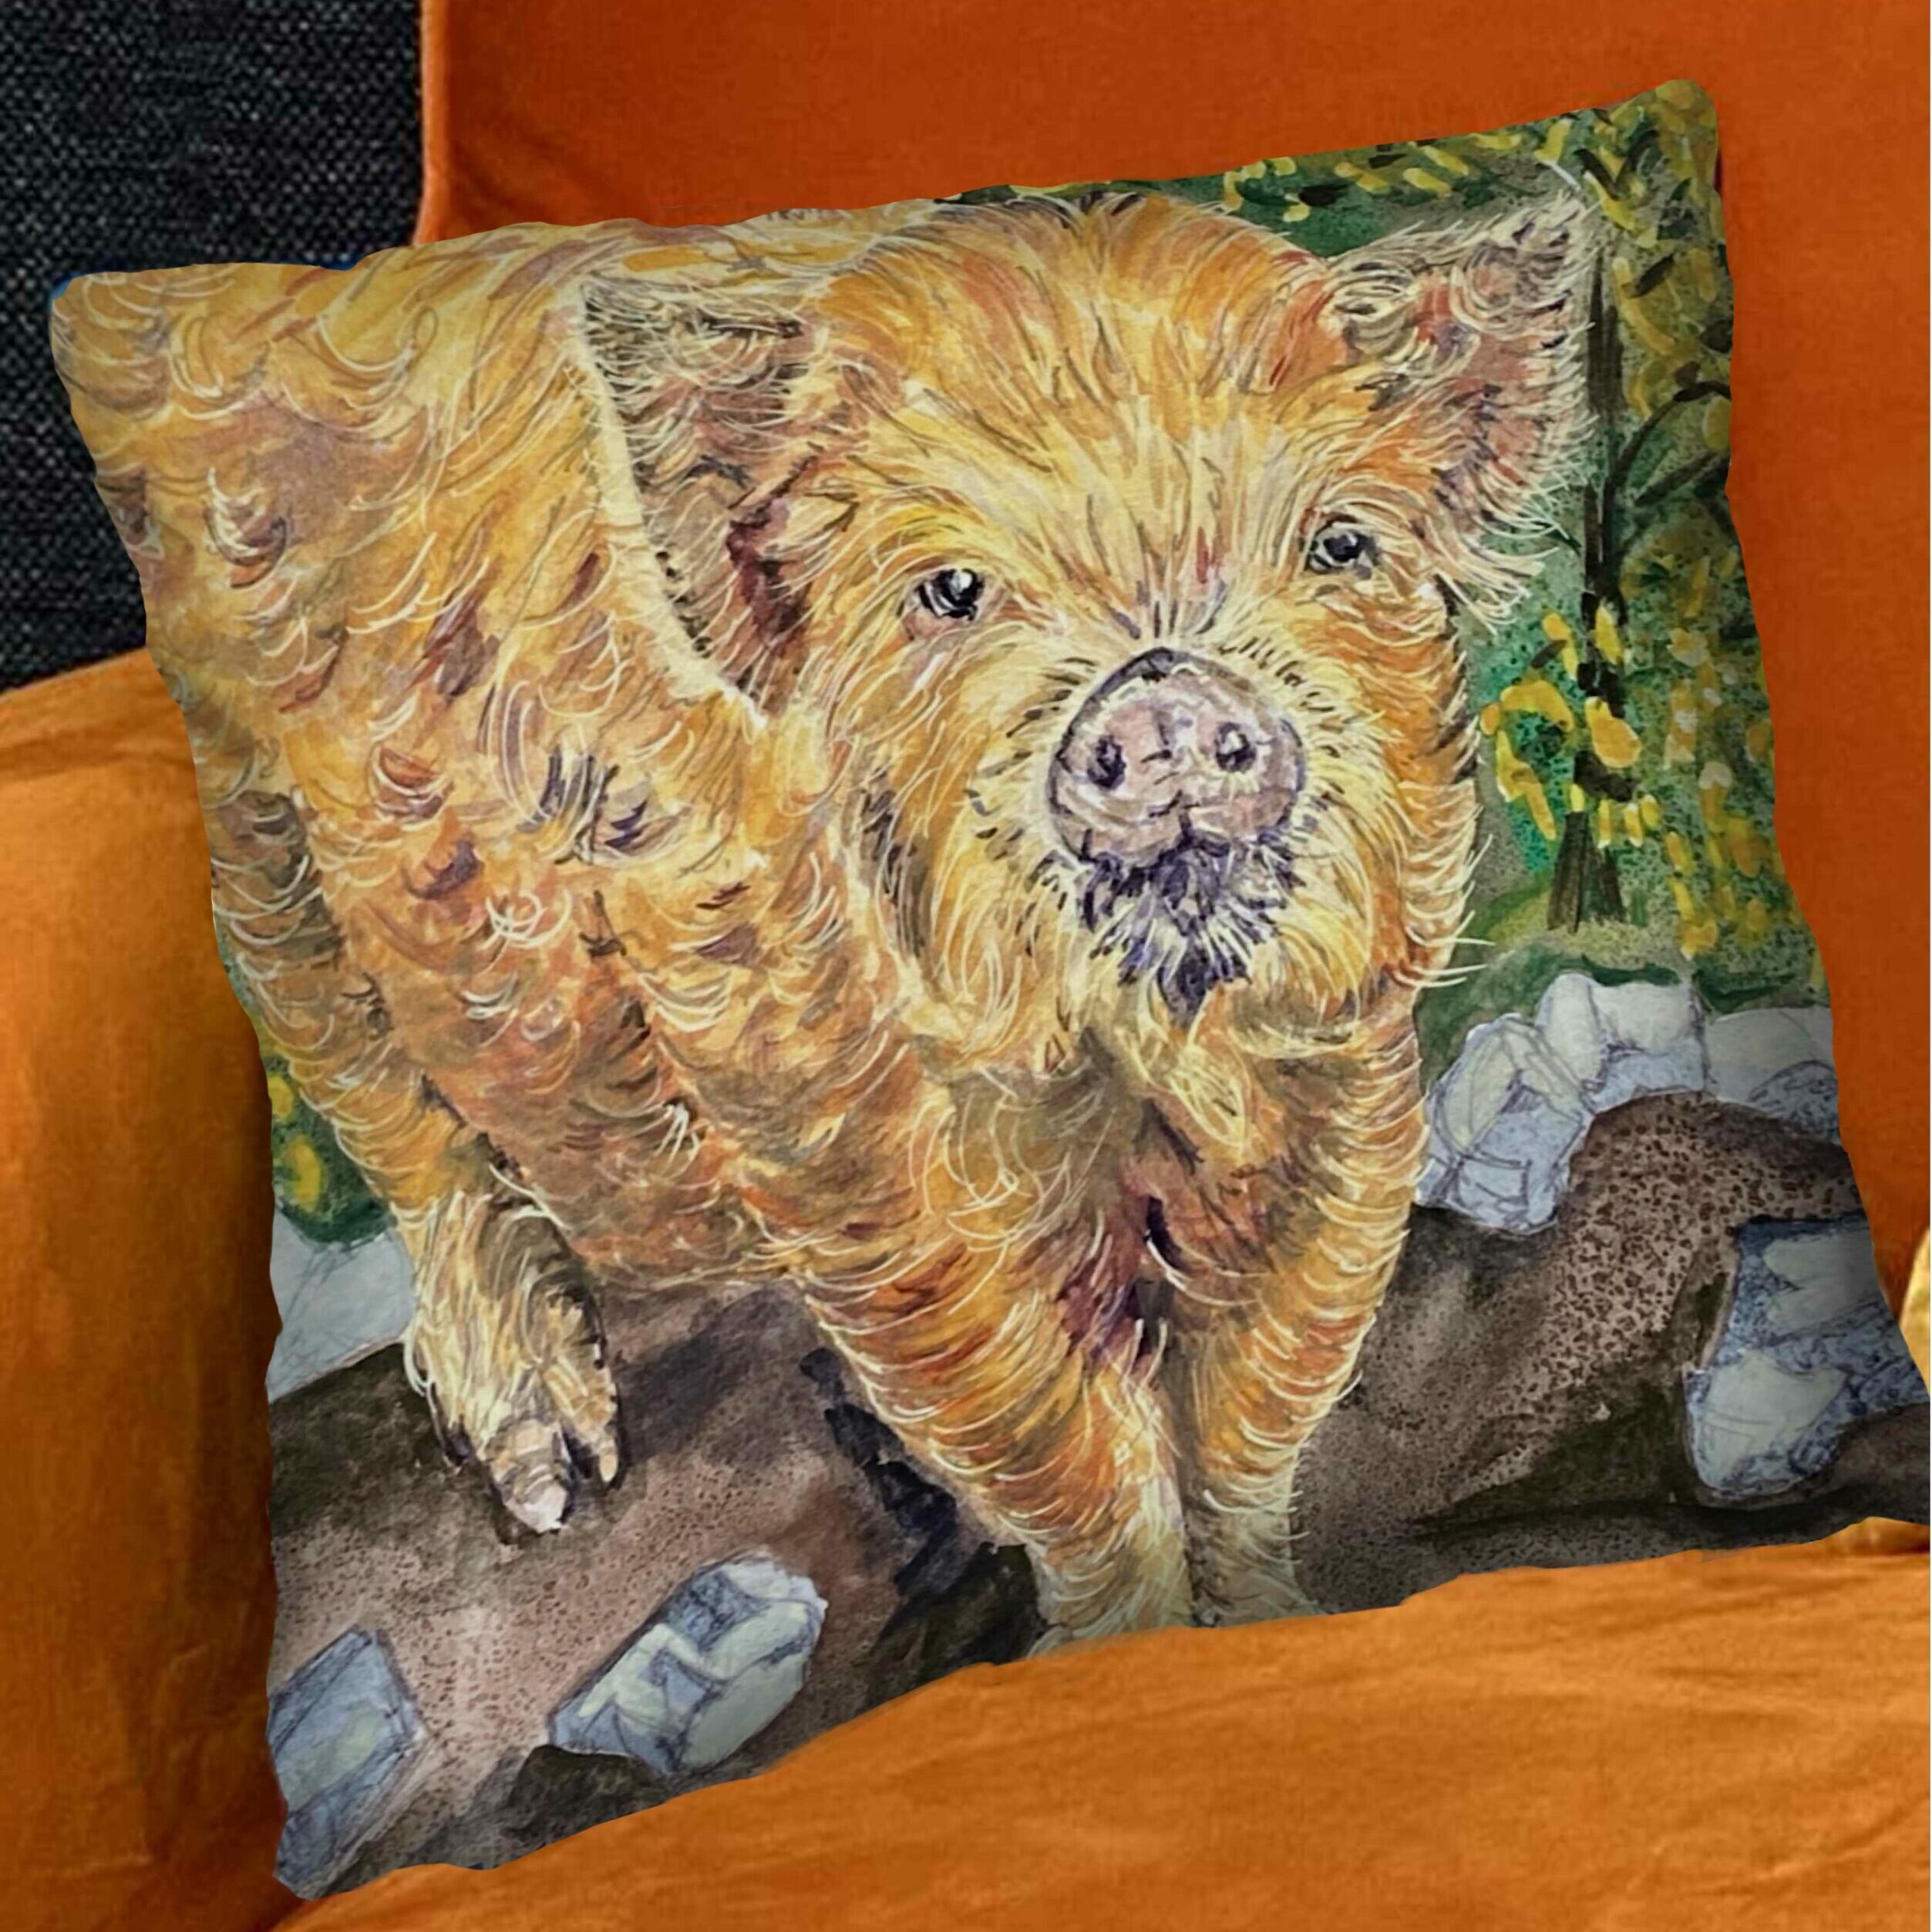 Ginger pig cushion on an orange sofa